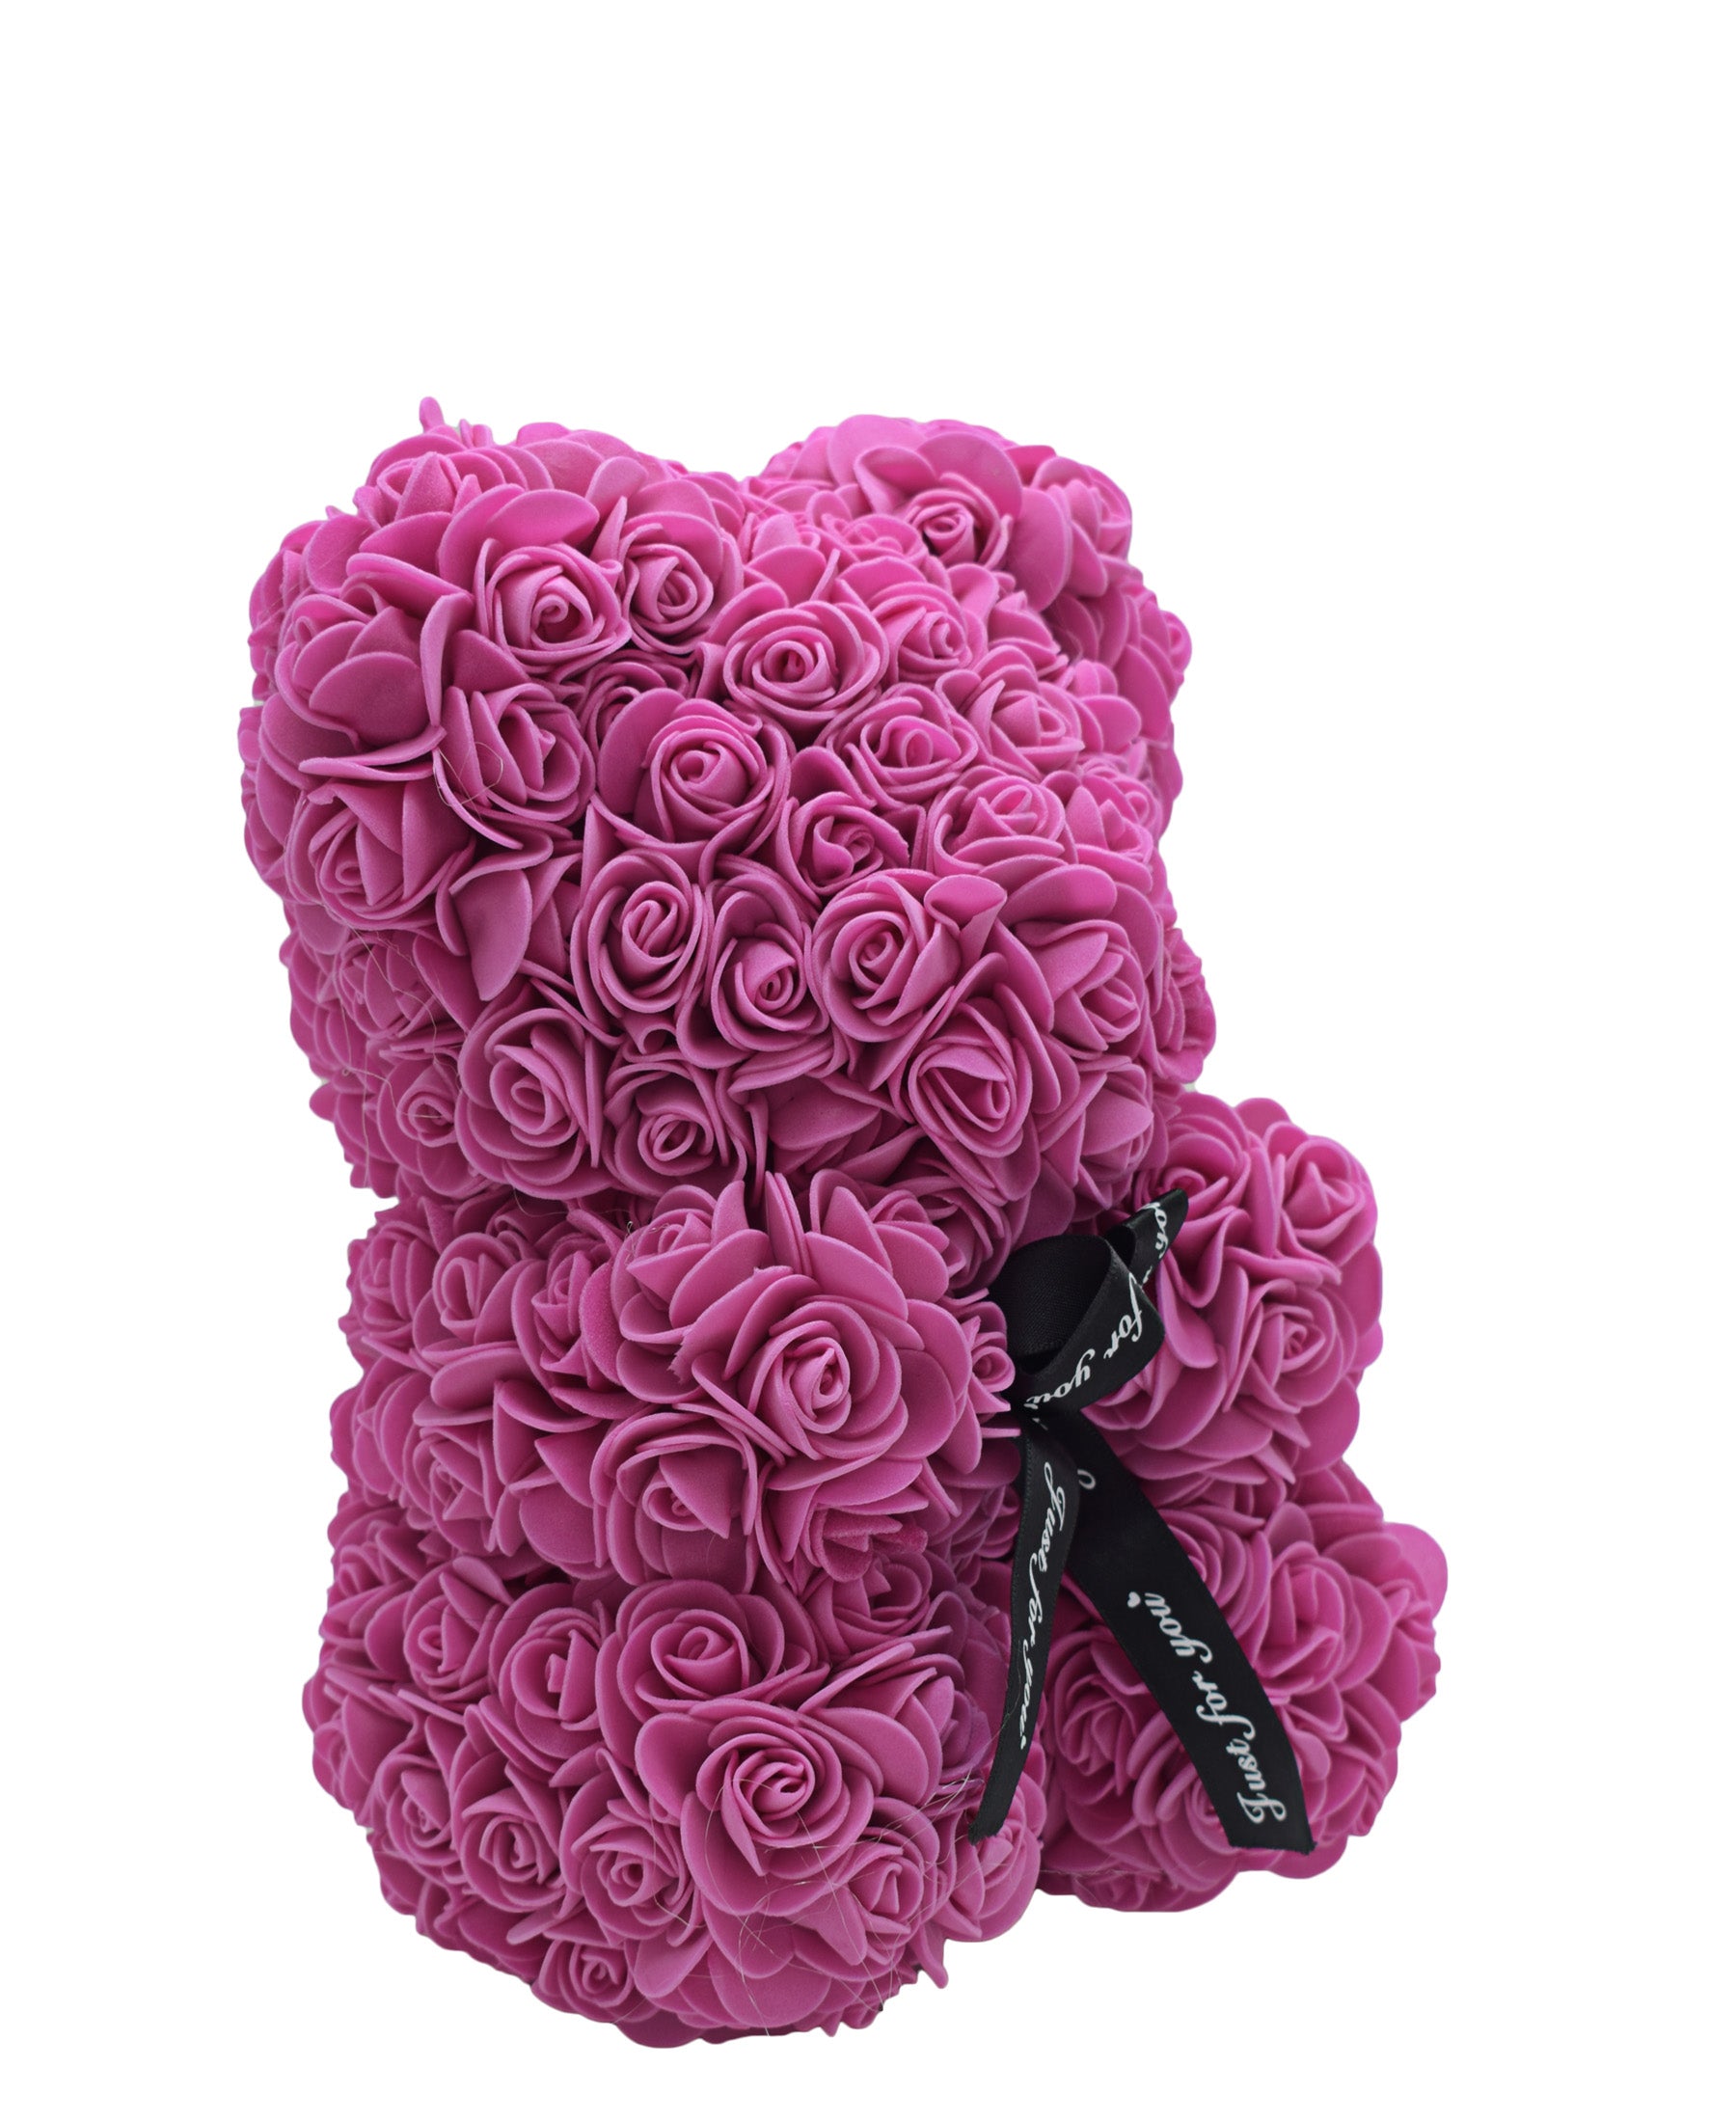 Lovers Design Floral Teddy Bear - Purple